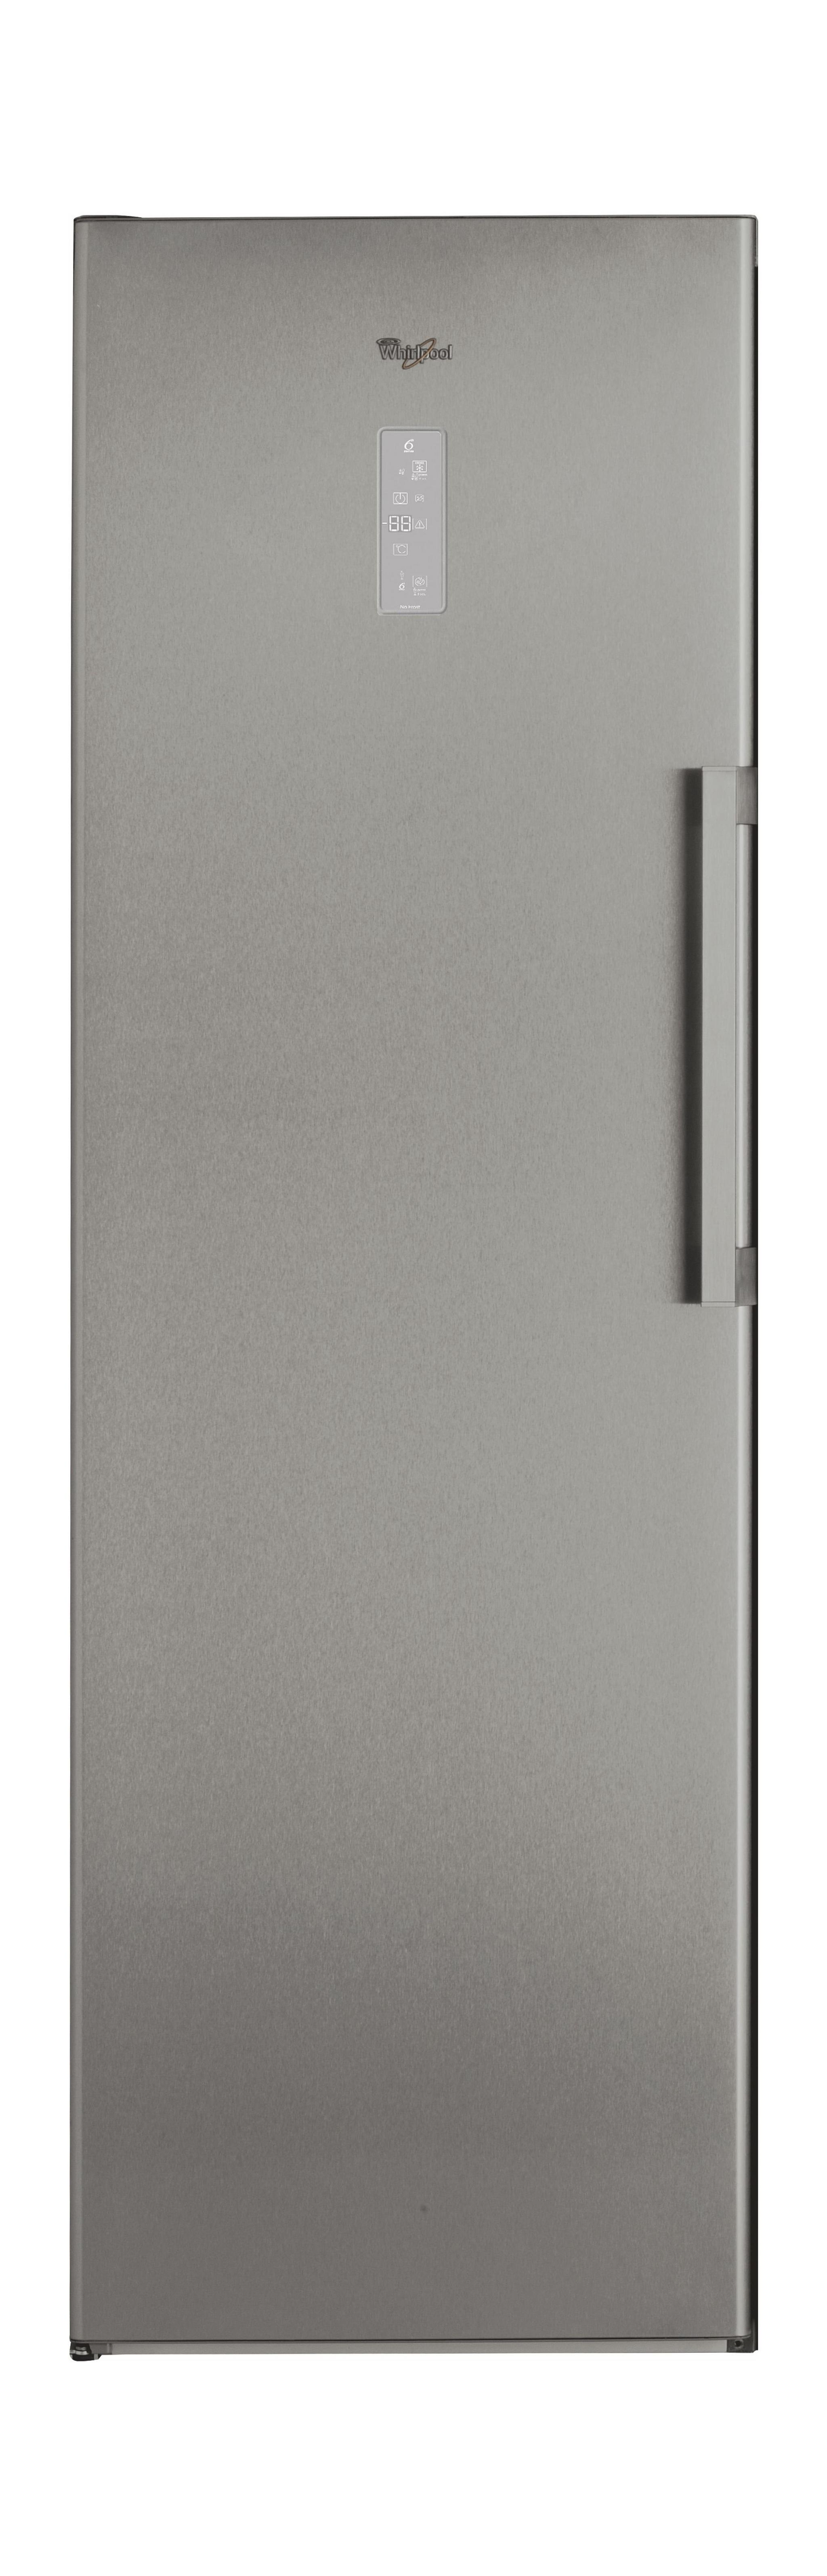 Whirlpool 10 CFT Upright Freezer (UW8-F2D-XBI-EX) - Stainless Steel